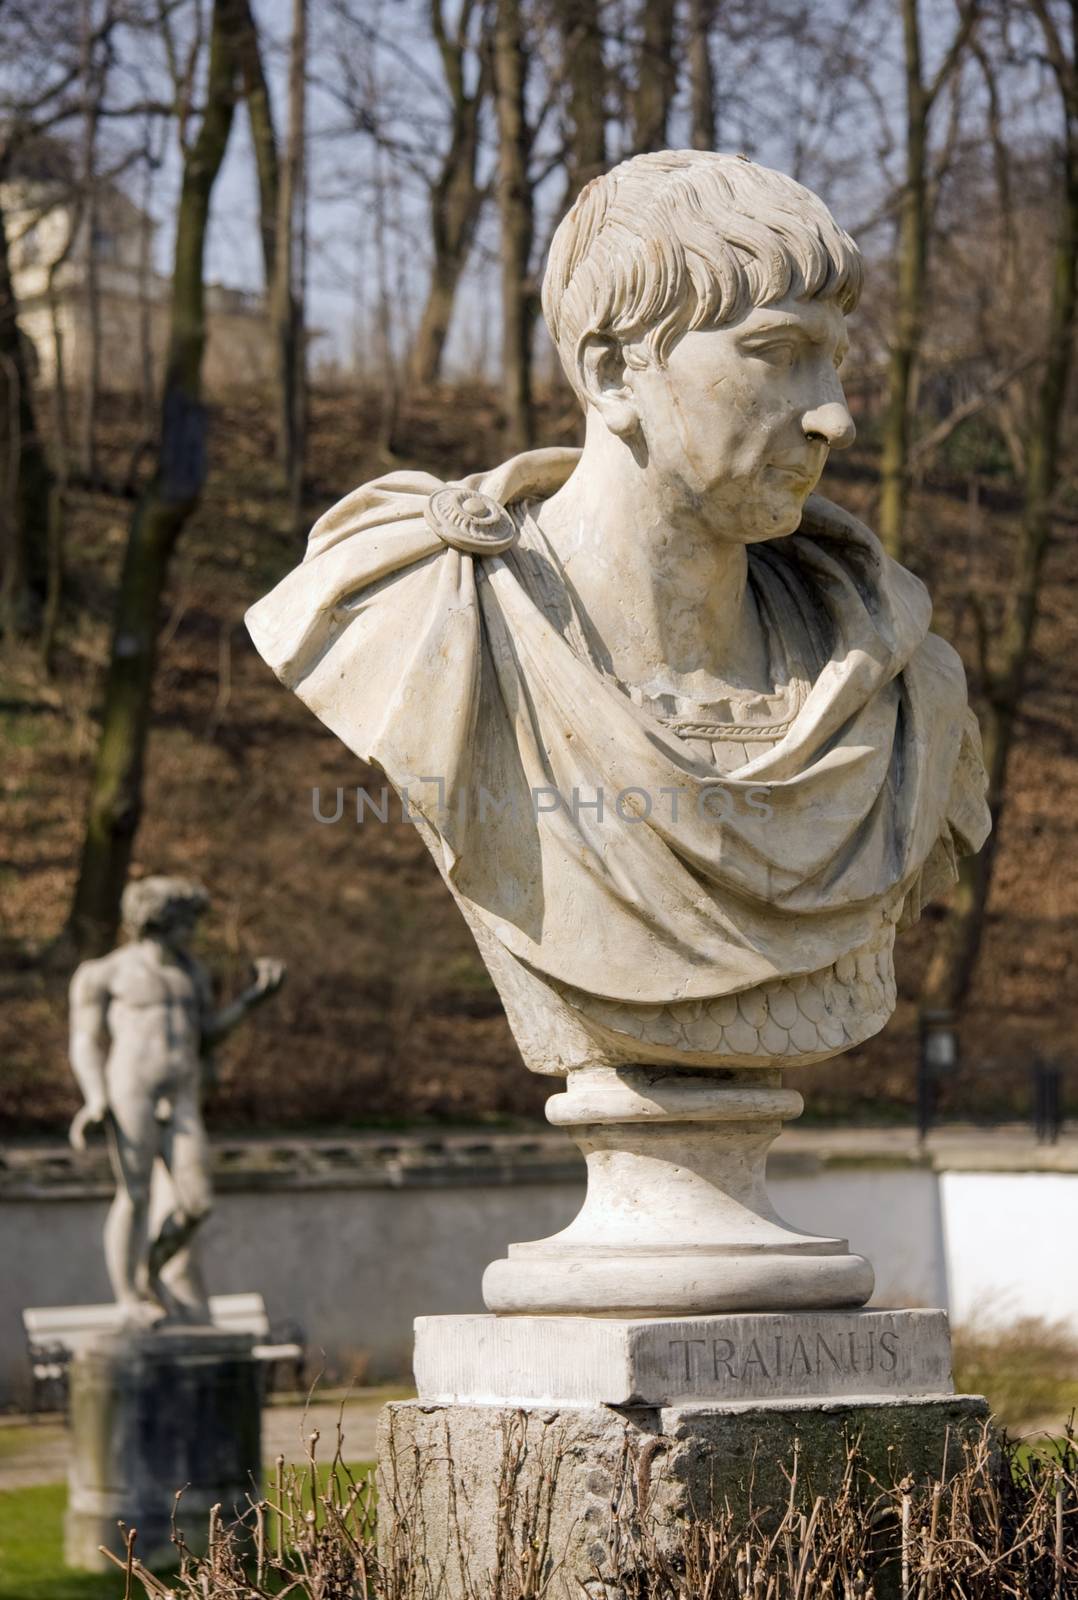 Sculpture of ancient Roman Emperor Trajan by fotoecho